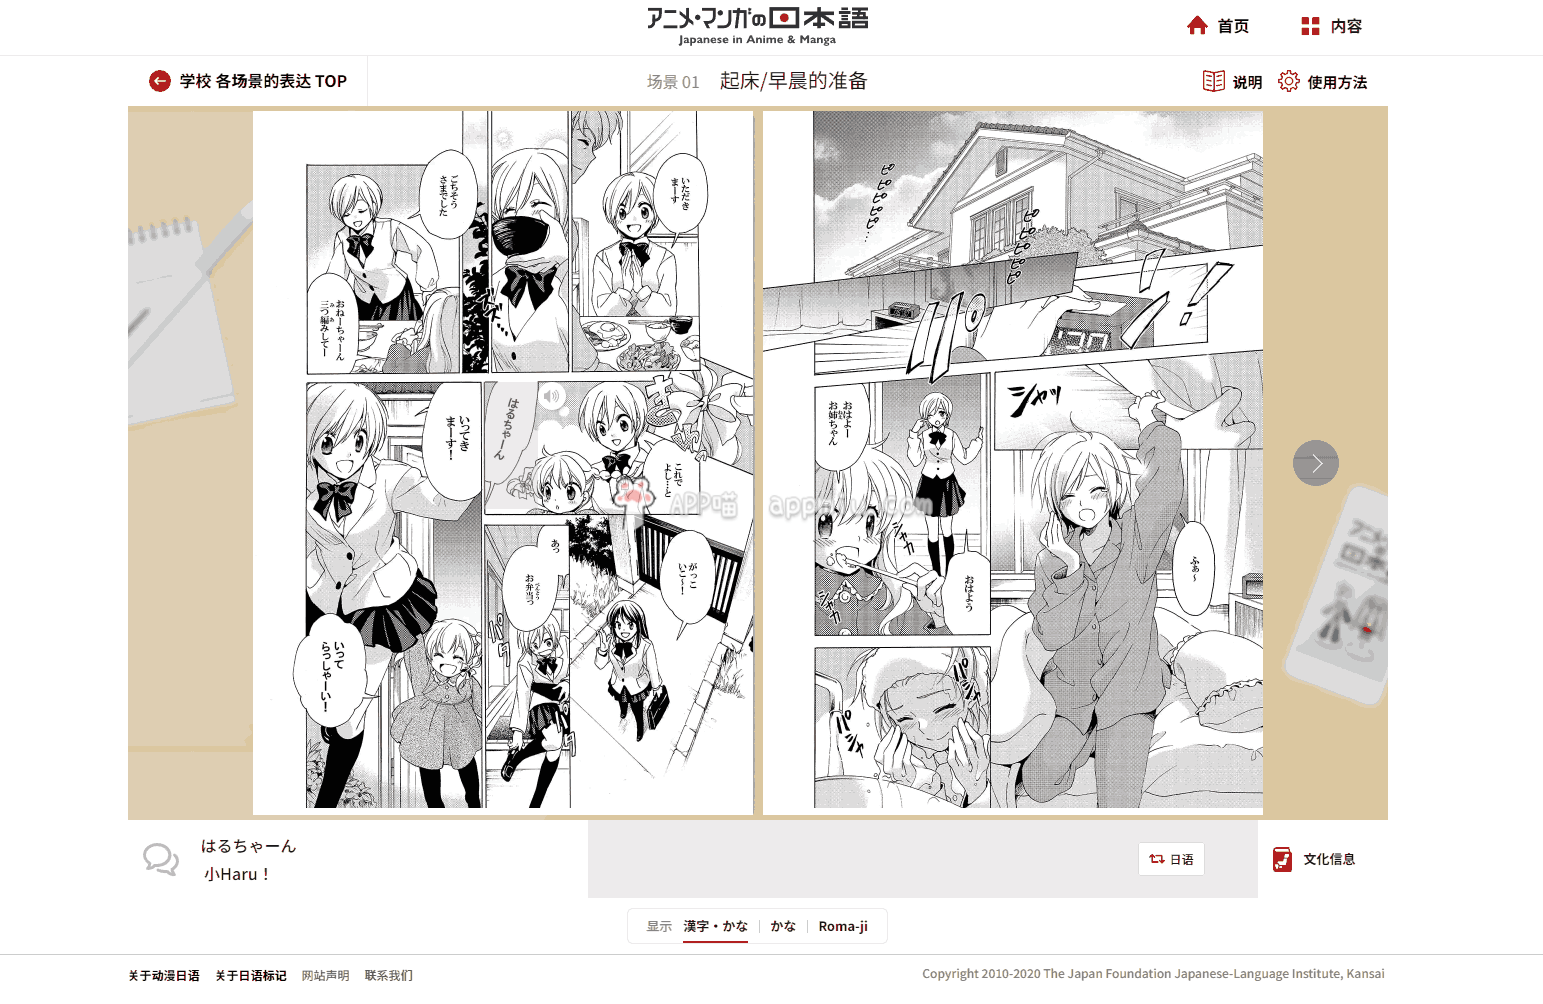 anime-manga日语学习动漫网站アニメ・マンガの日本語-APP喵-阿喵软件